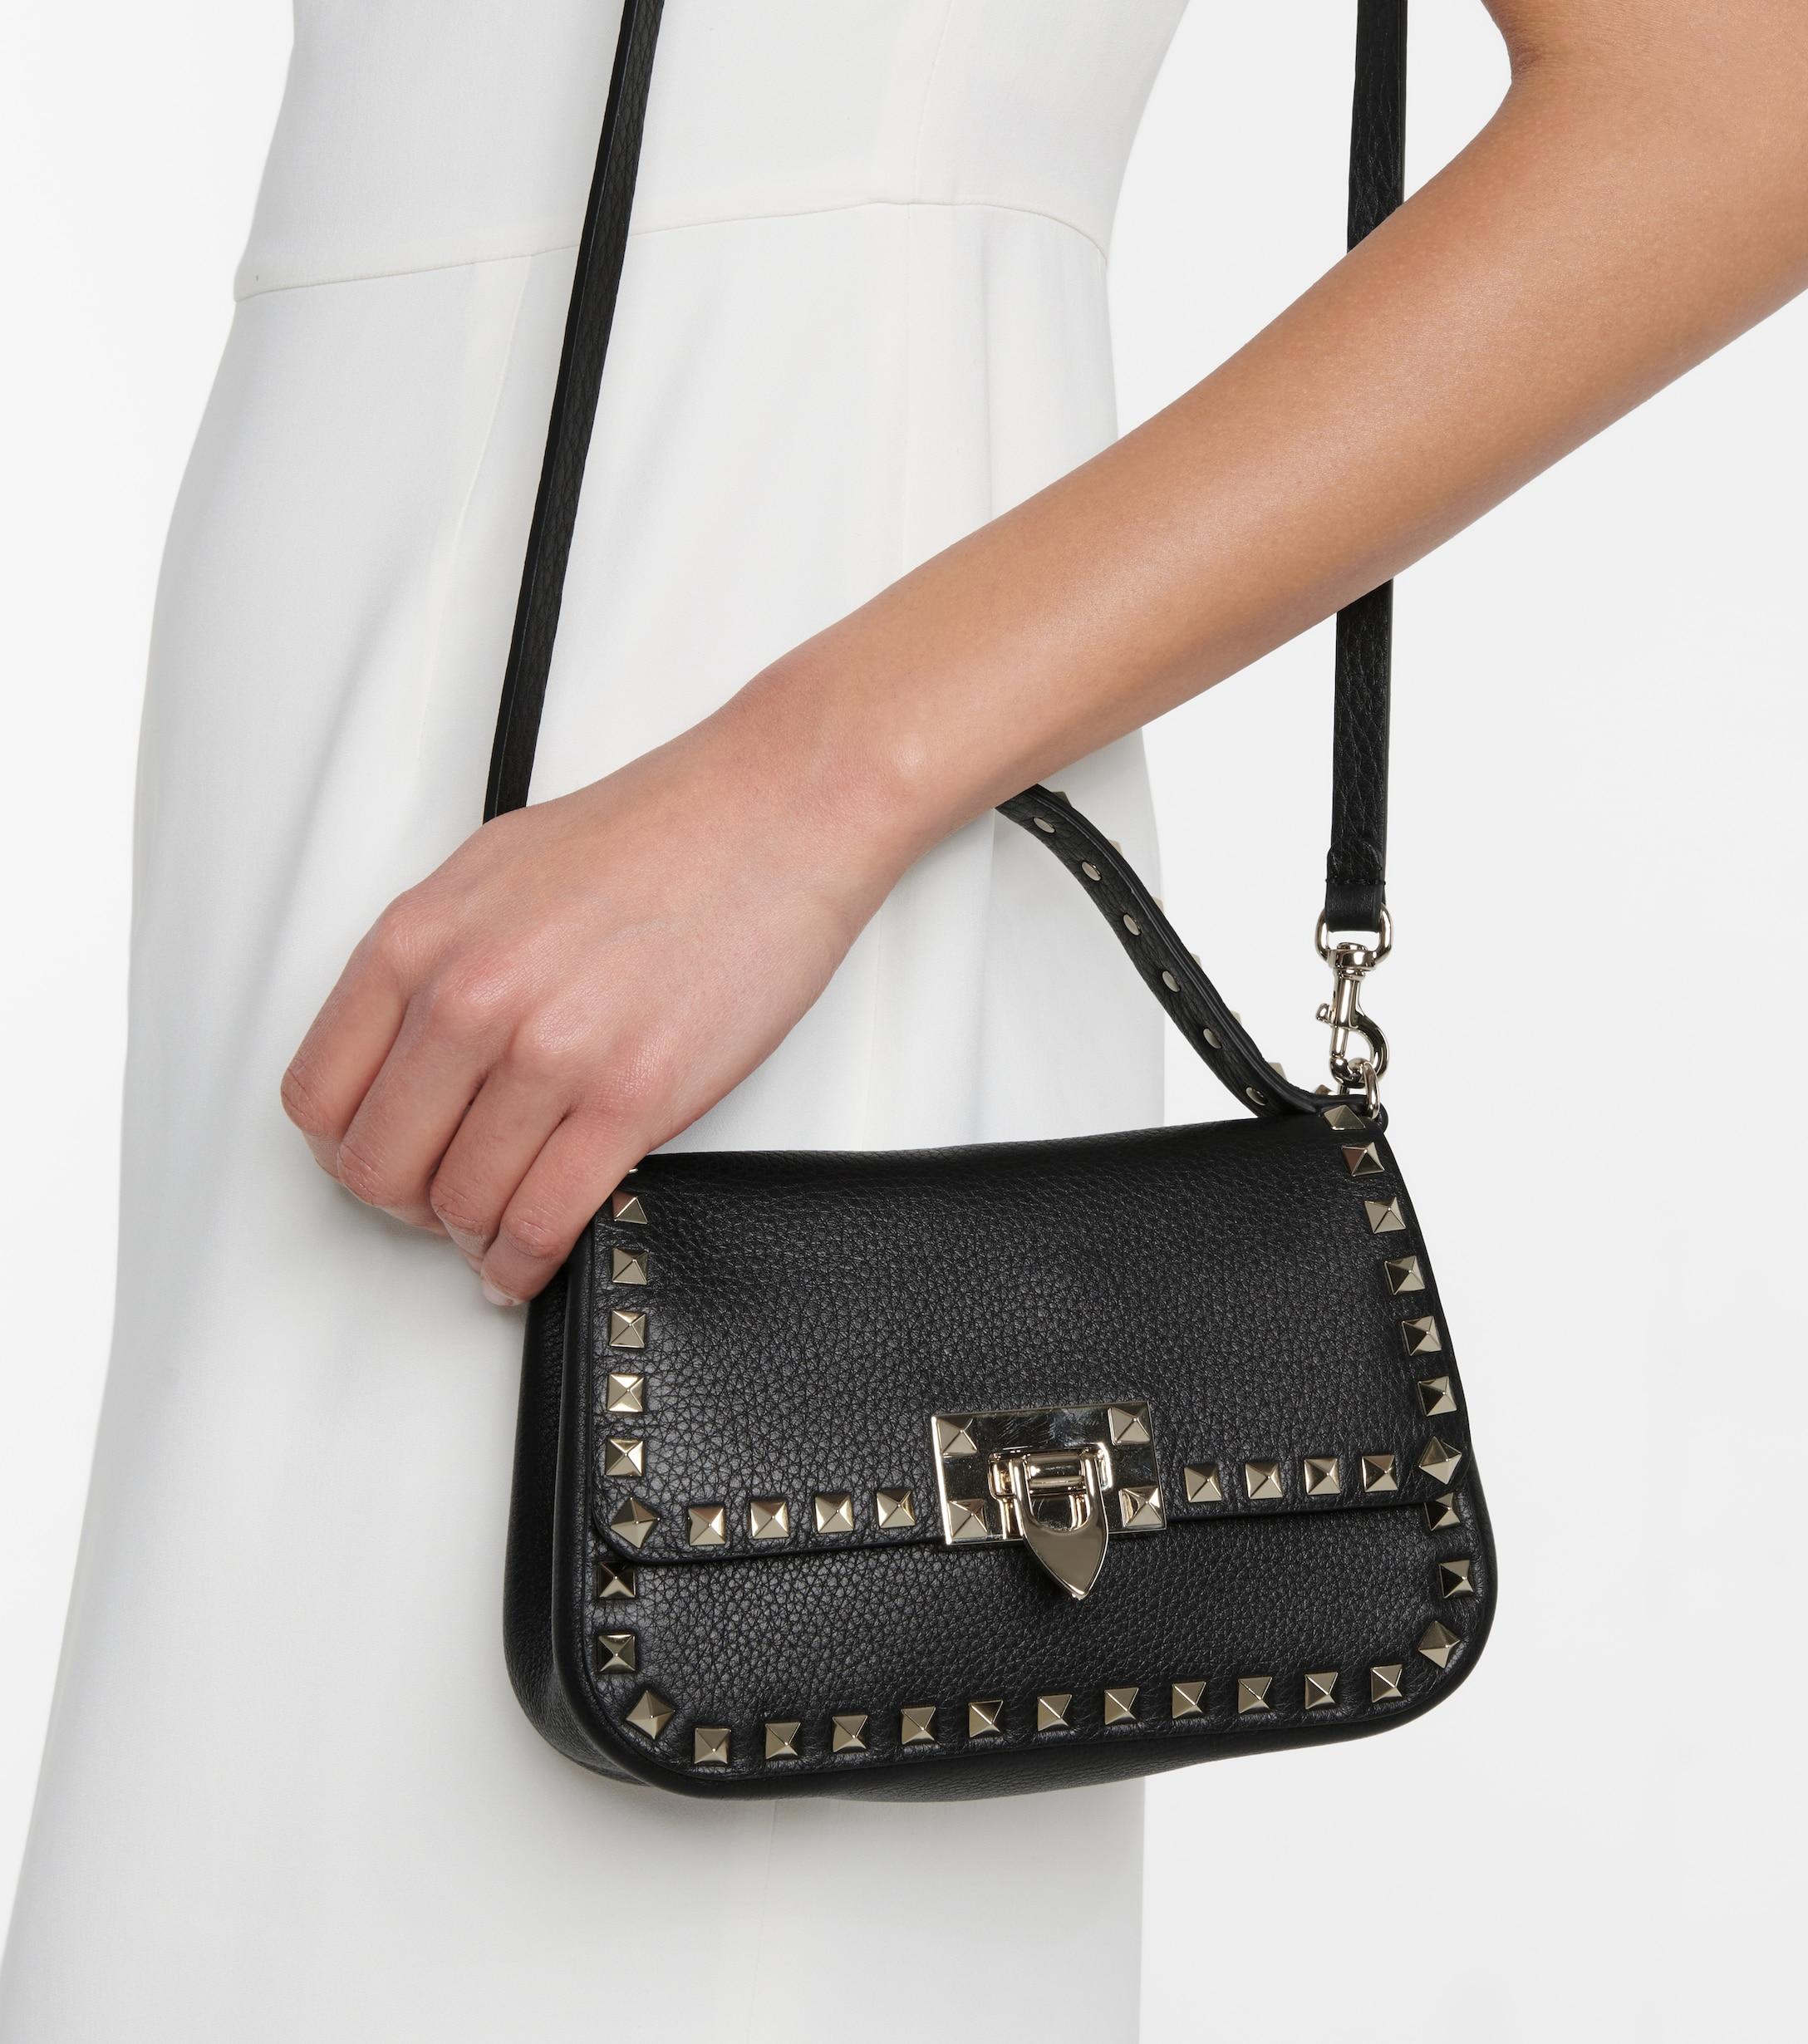 Valentino Garavani Rockstud Small Leather Shoulder Bag in Black - Lyst